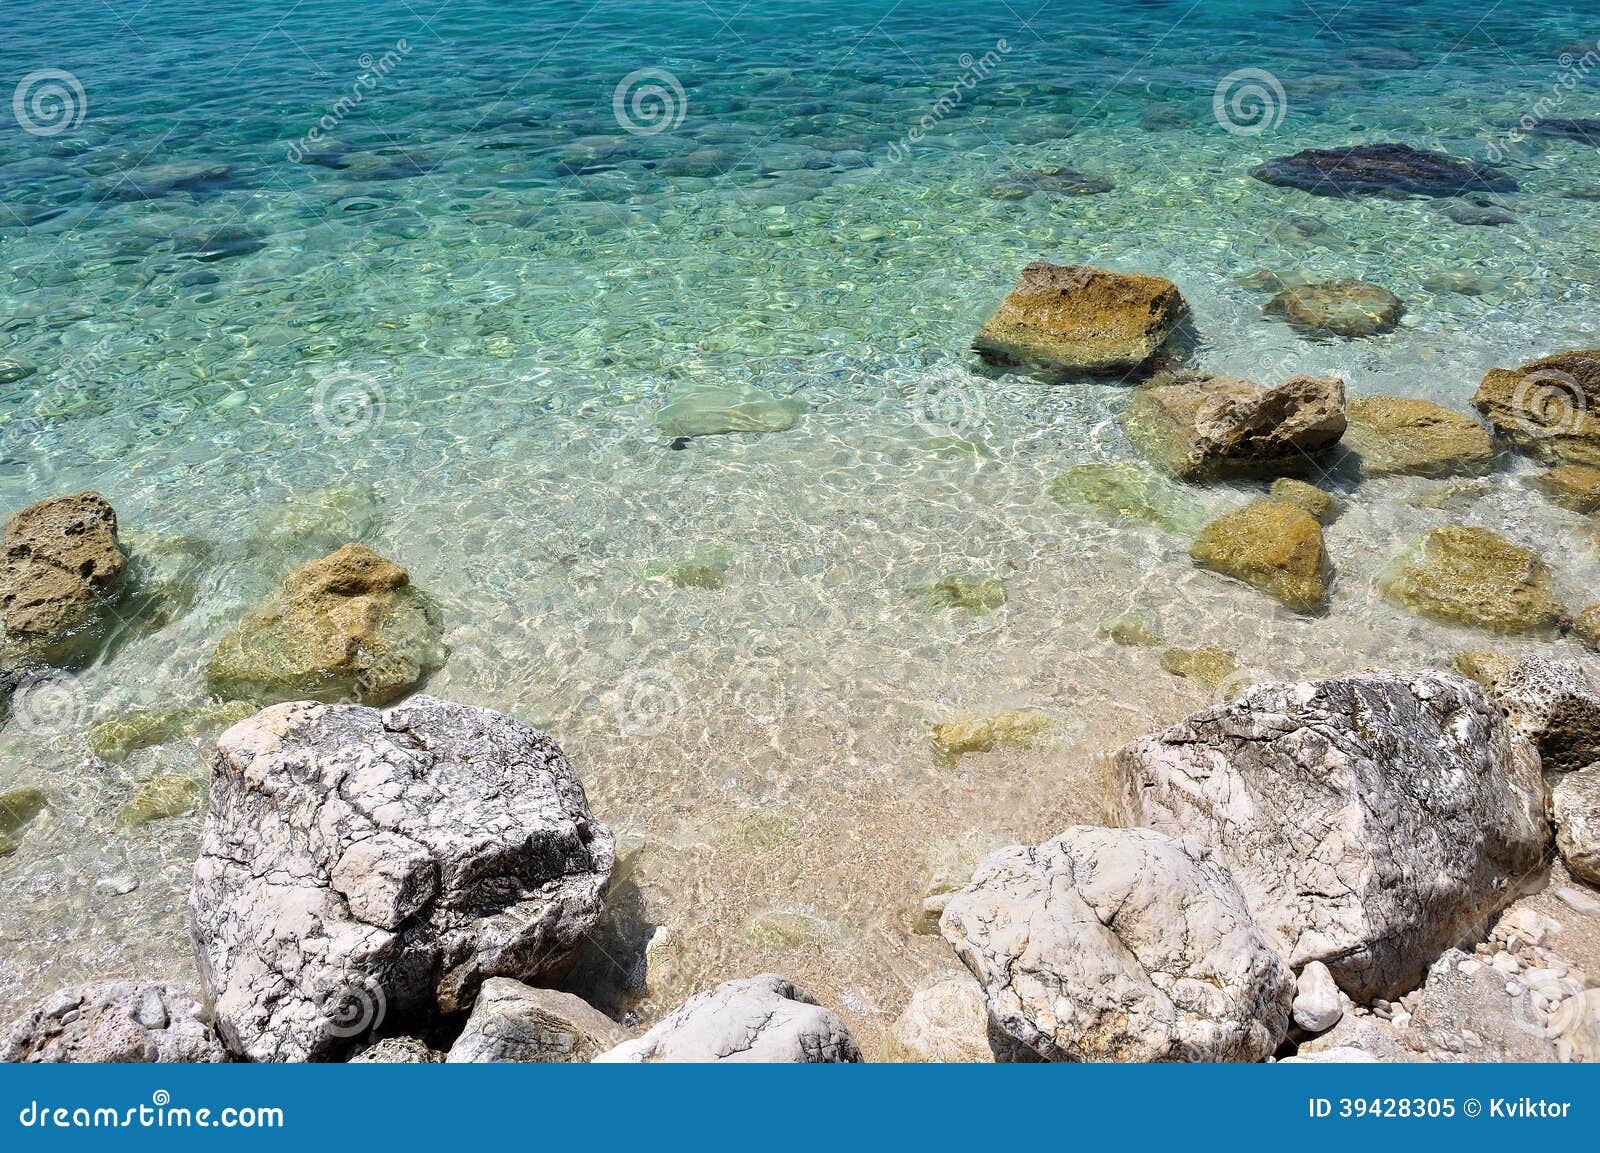 https://thumbs.dreamstime.com/z/beautiful-beach-big-stones-podgora-croatia-crystal-clear-adriatic-sea-39428305.jpg